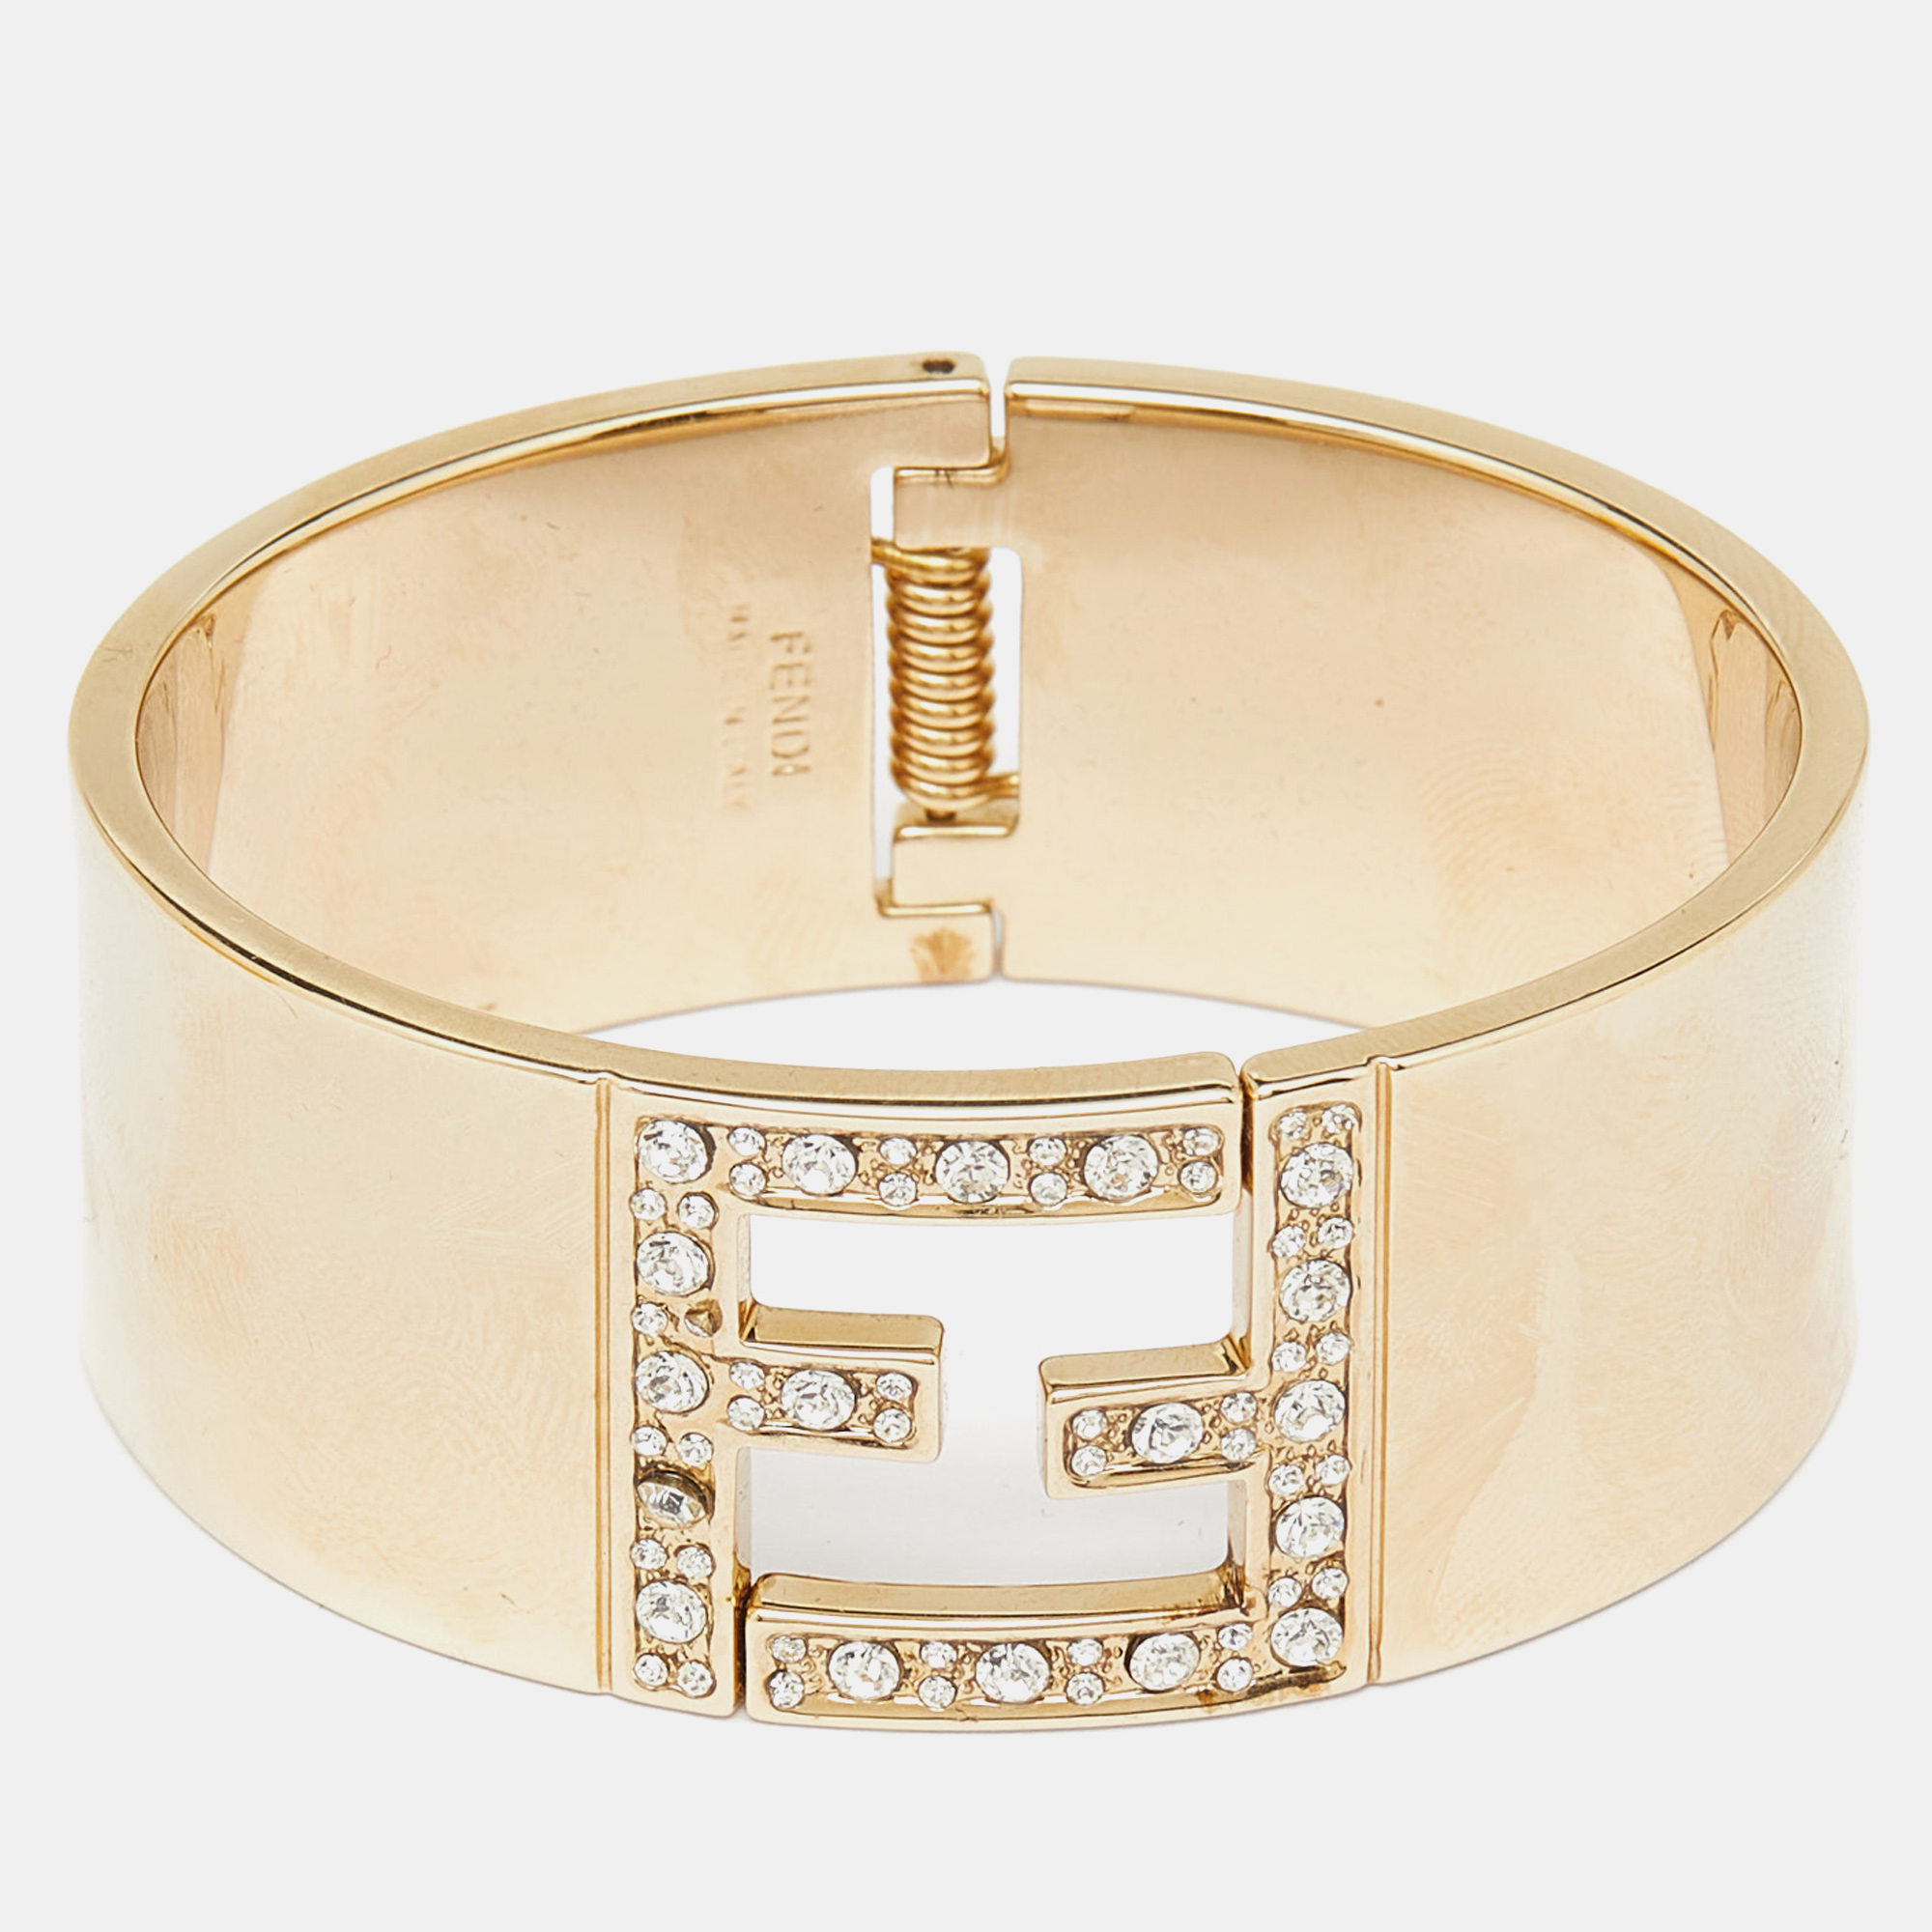 Fendi fendista crystal gold tone bracelet s